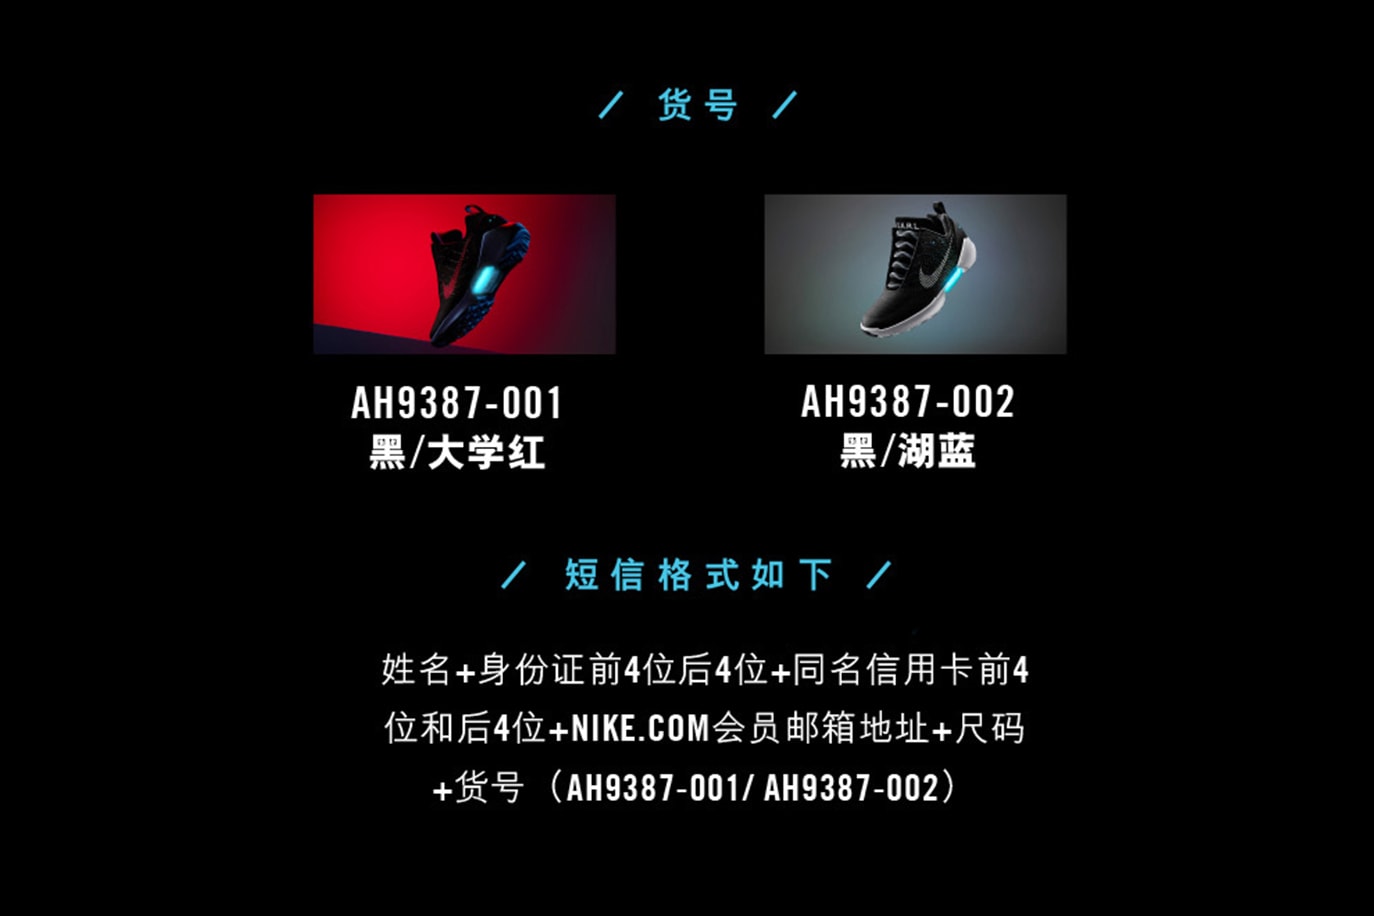 Nike HyperAdapt 1.0 China Release Info